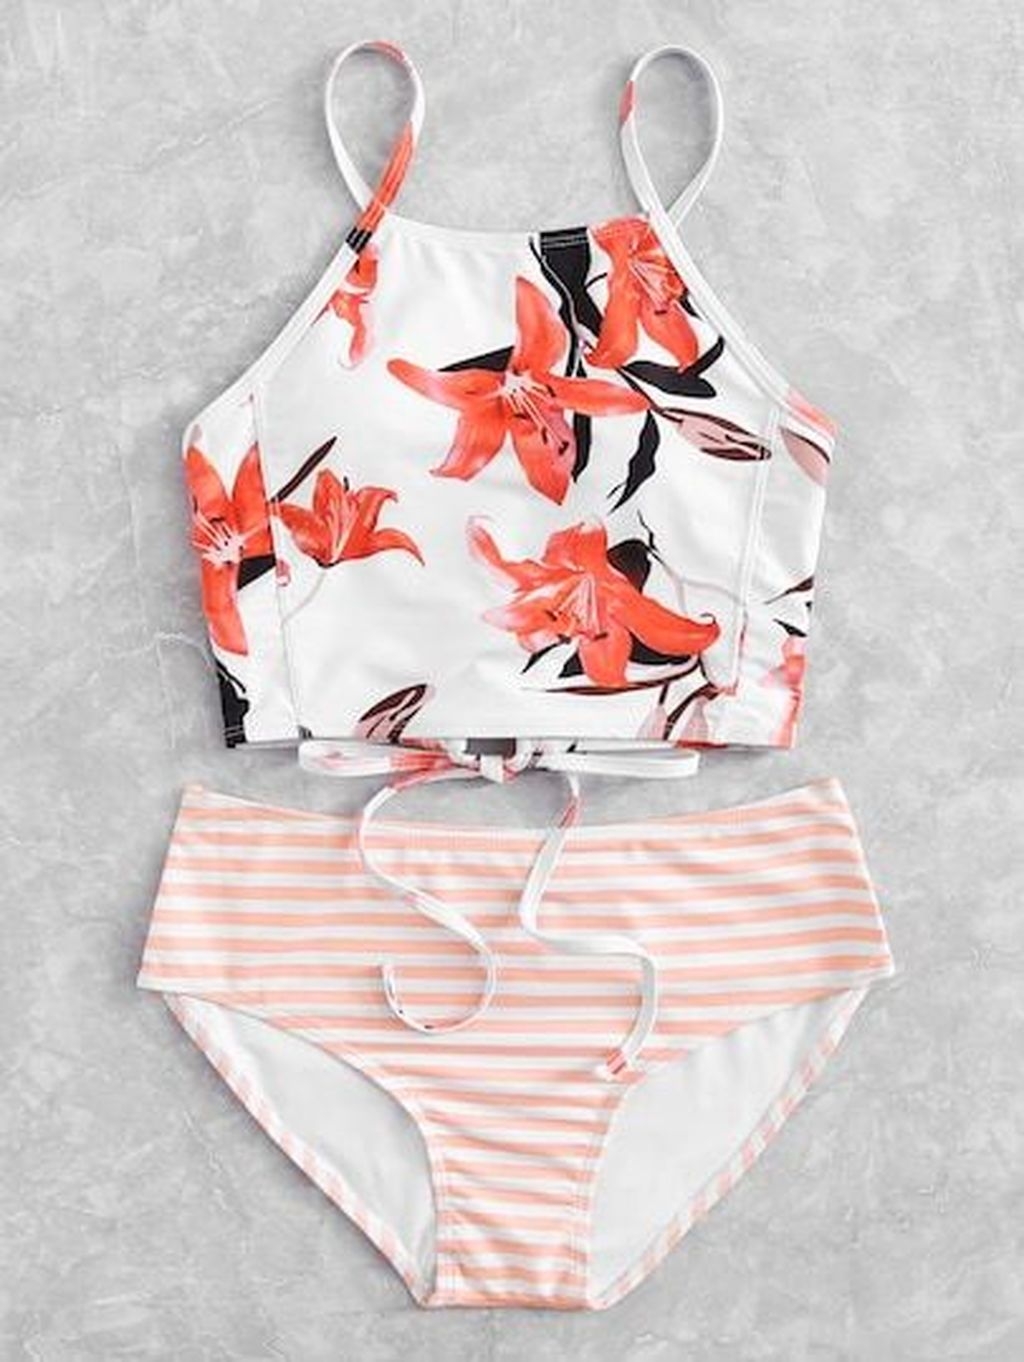 49 Unique Bikini Ideas For Spring And Summer - ADDICFASHION